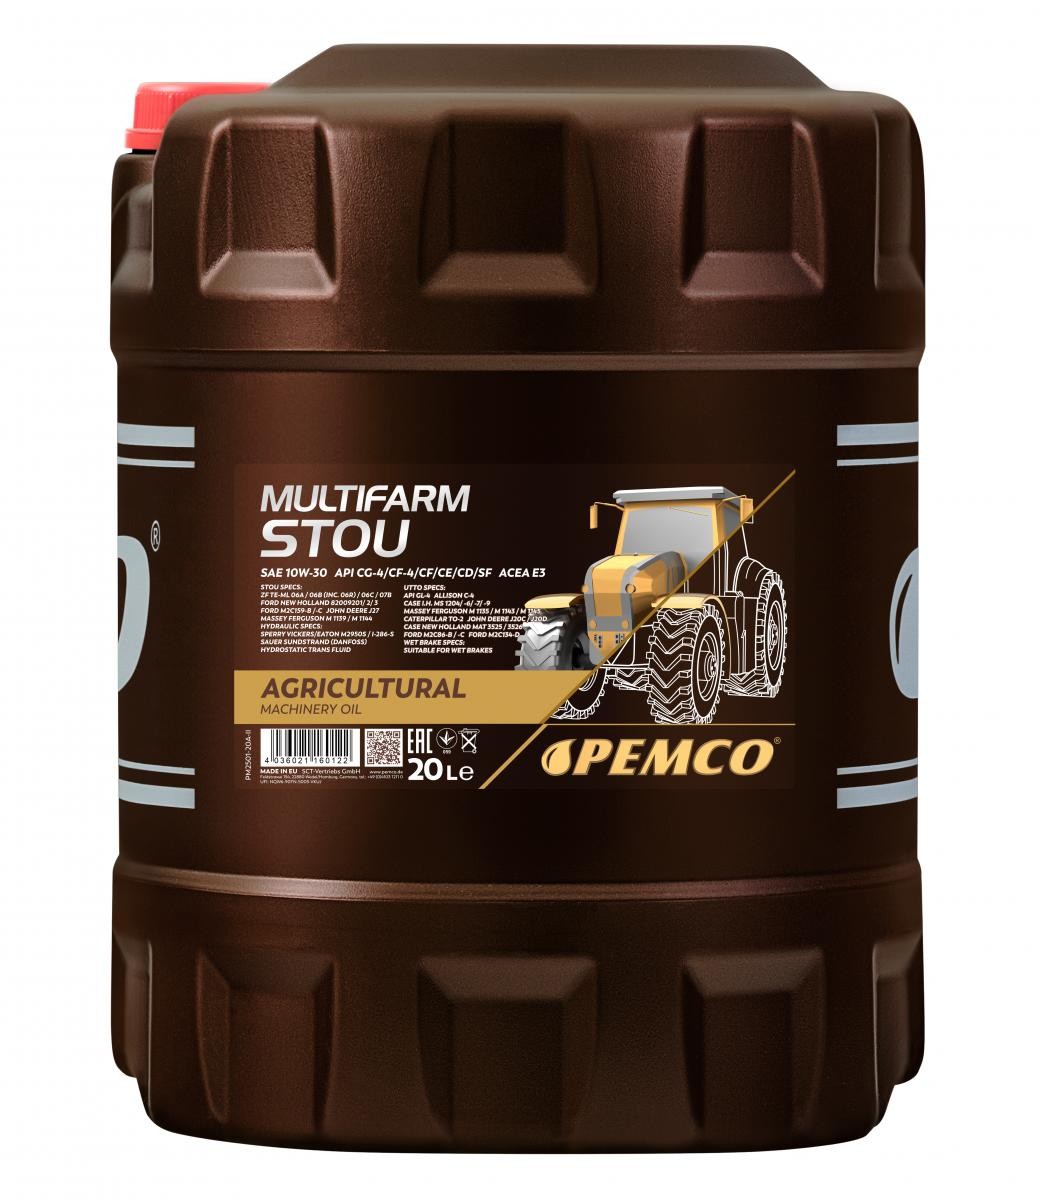 PEMCO Multifarm STOU PM250120 Multi-function Oil Canister